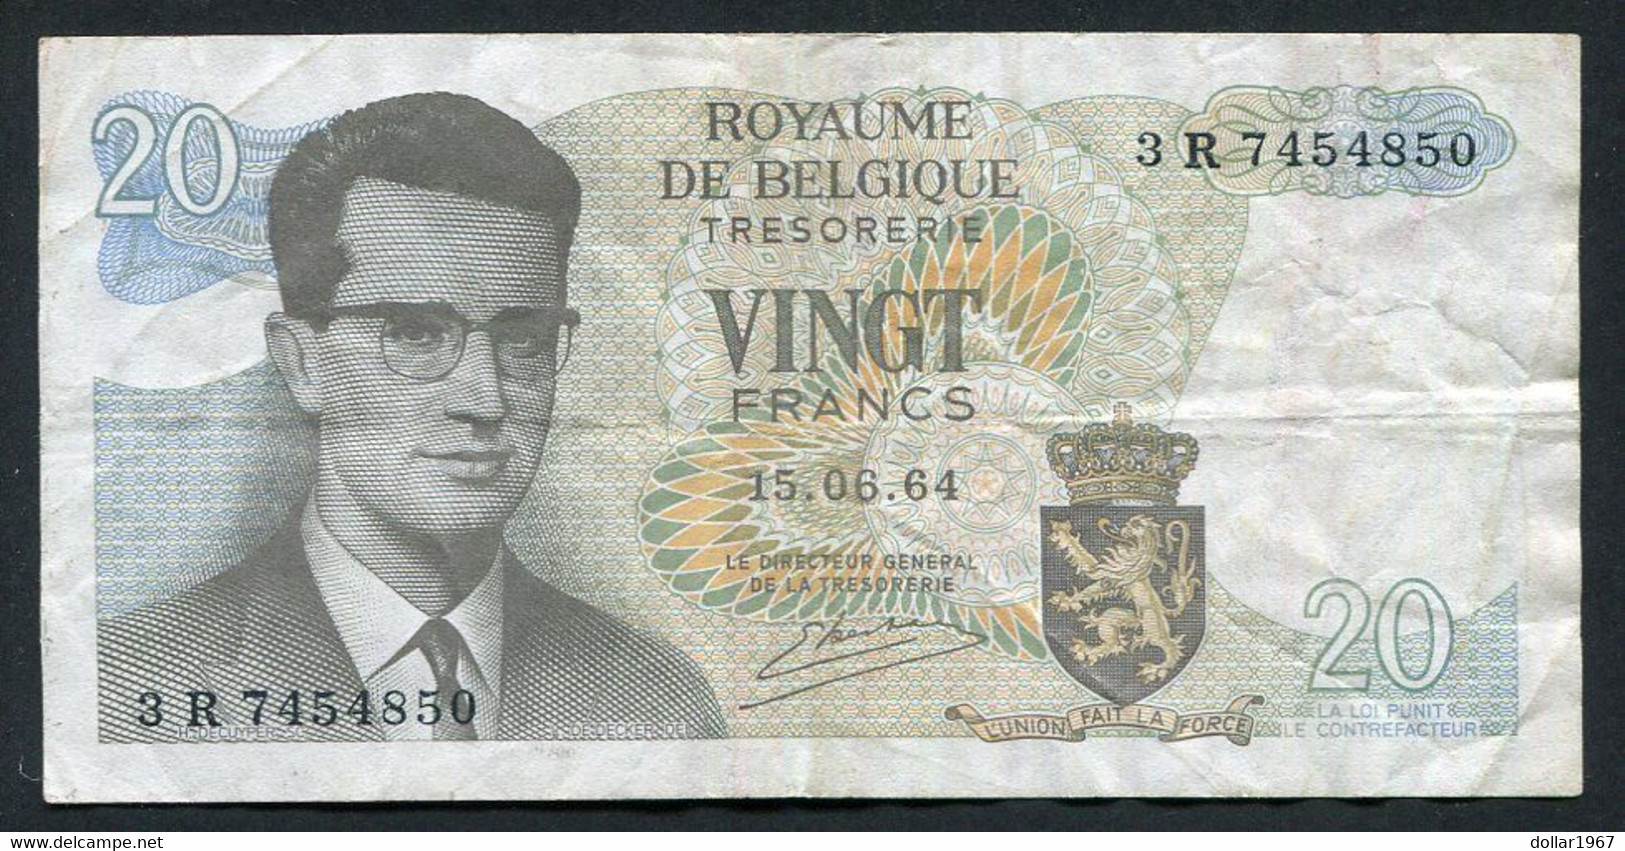 België Belgique Belgium 15 06 1964 -  20 Francs Atomium Baudouin.  3 R 7454850 - 20 Francos